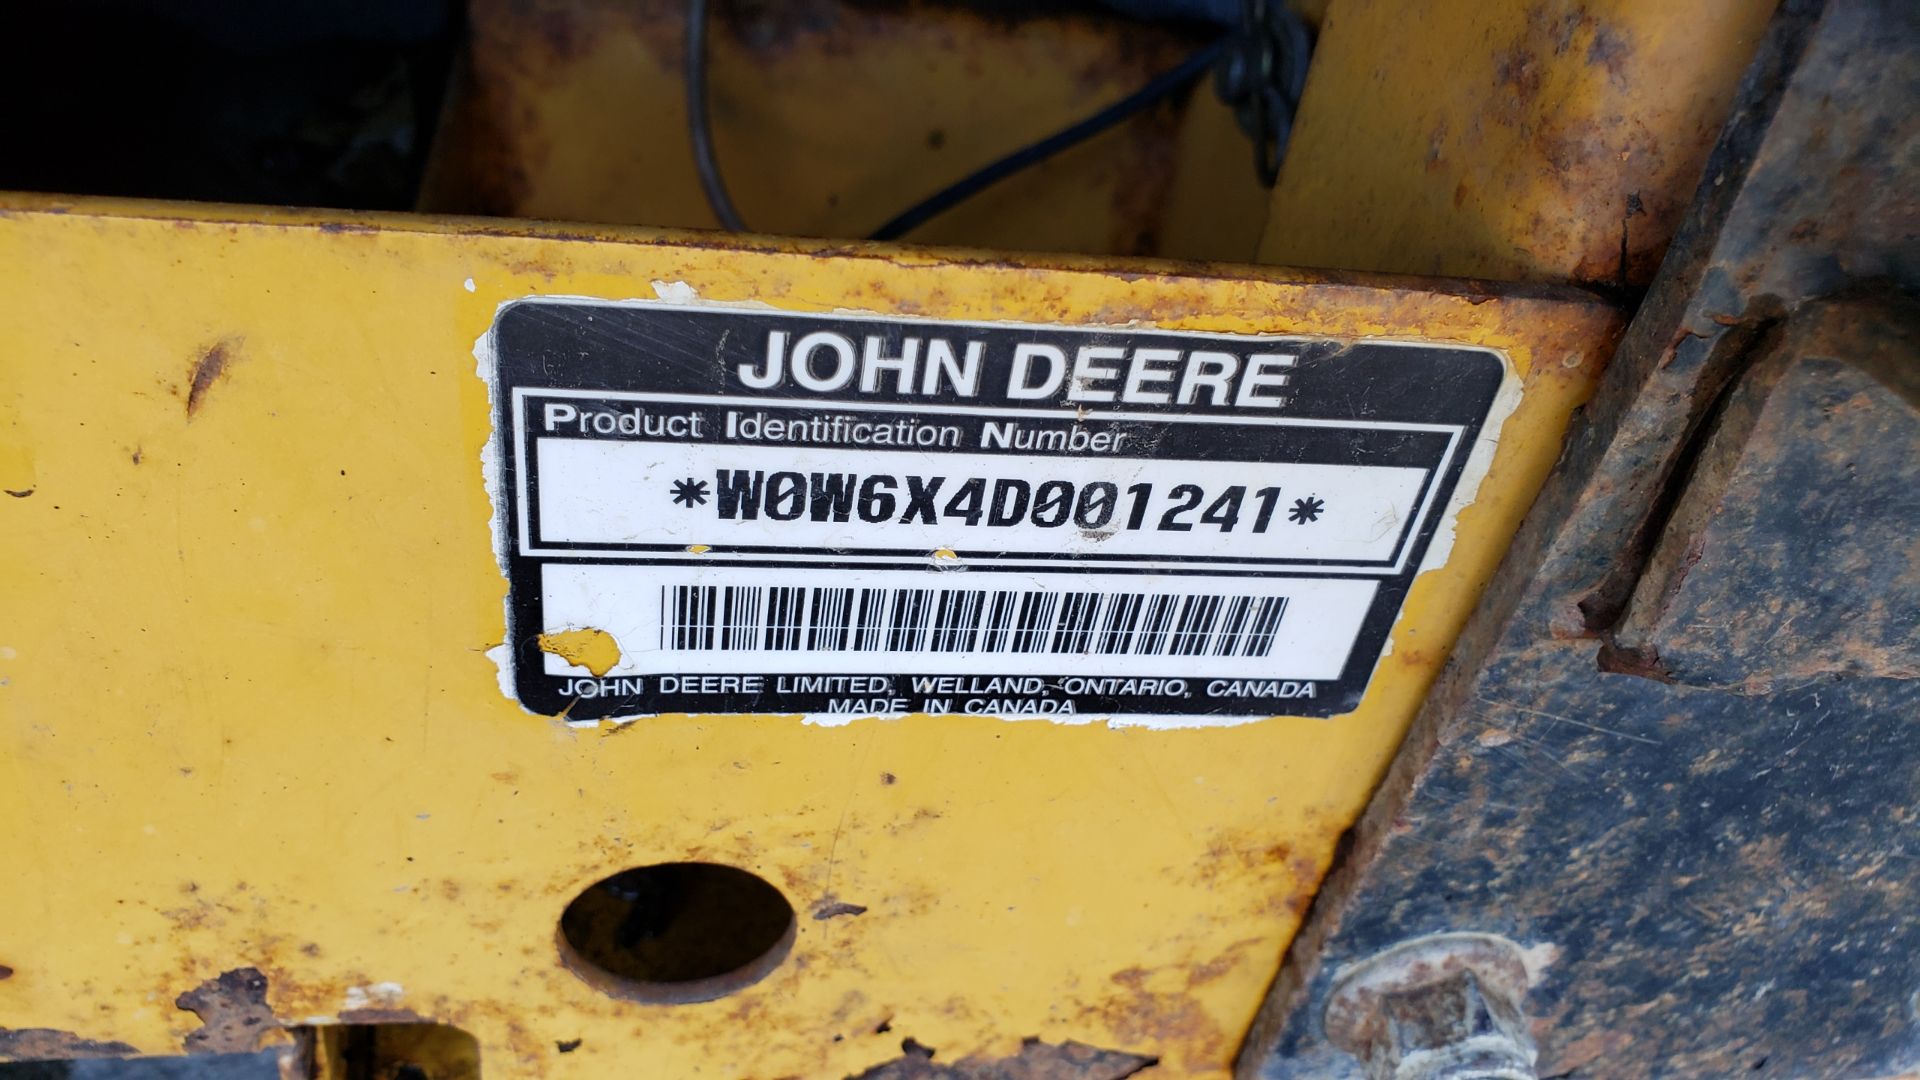 John Deere 6 x 4 Gator Model WOW6X4, s/n WOW6X4D001241, Diesel - Image 6 of 11